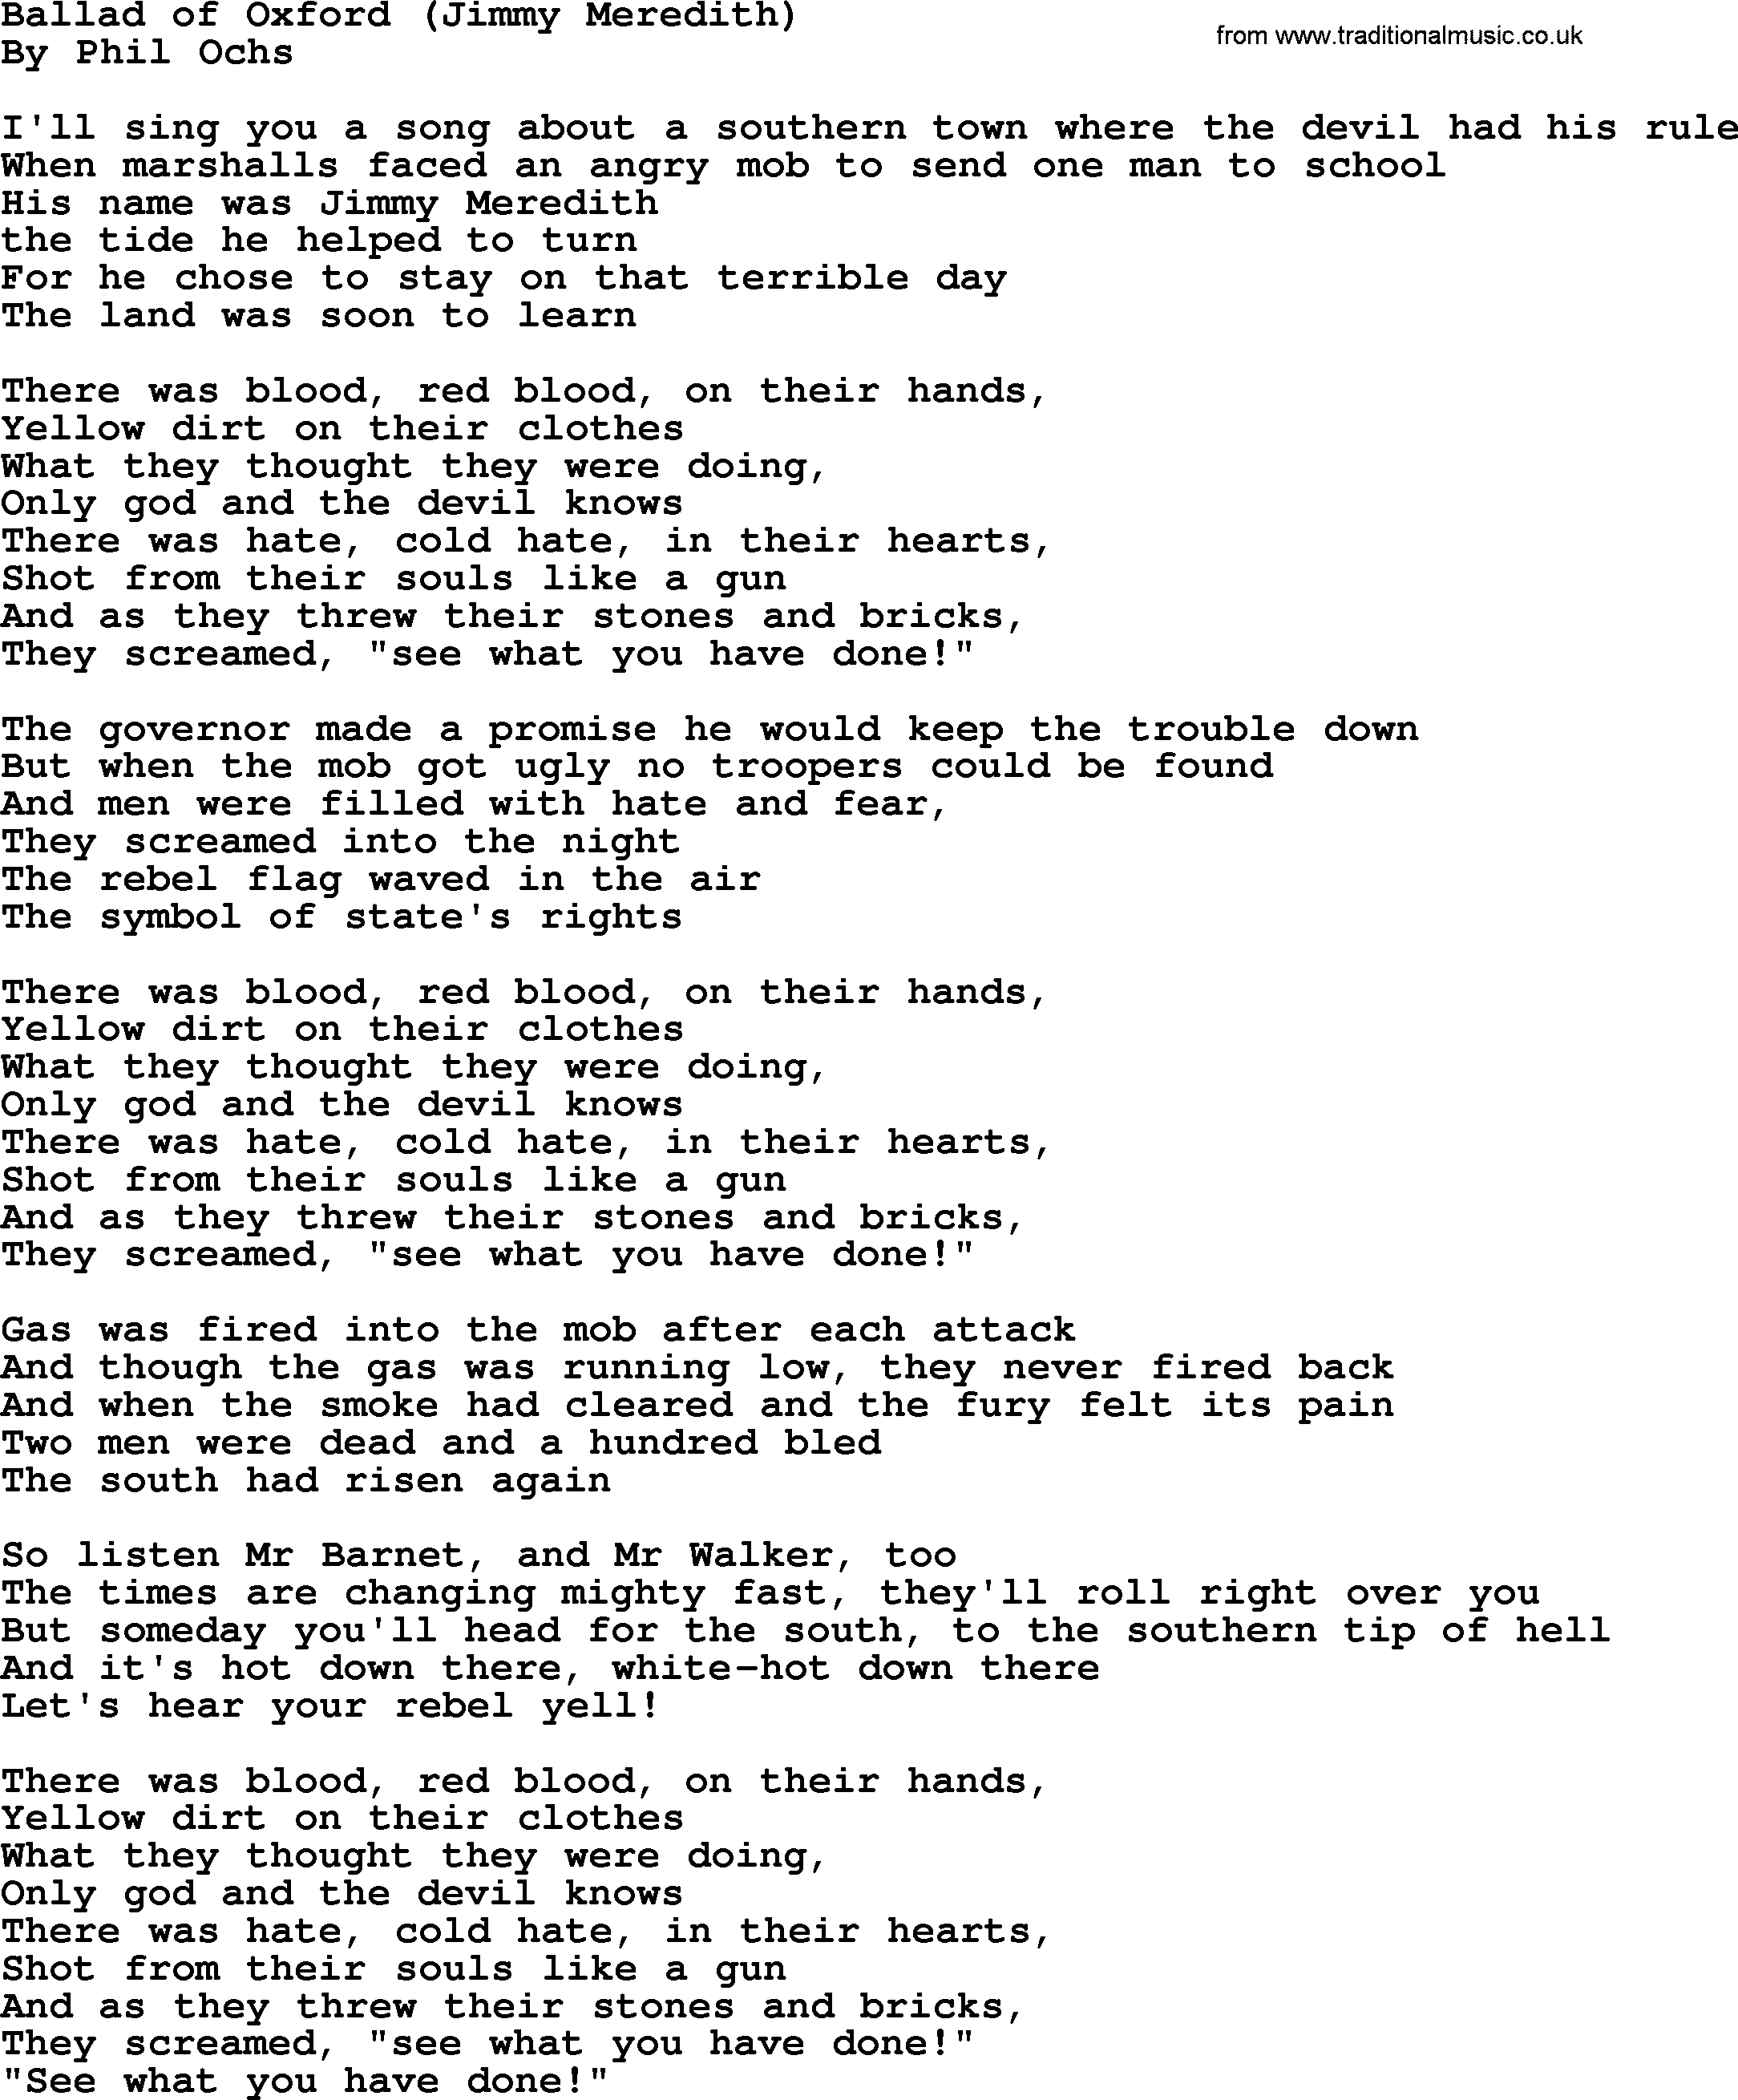 Phil Ochs song Ballad Of Oxford(jimmy Meredith), lyrics